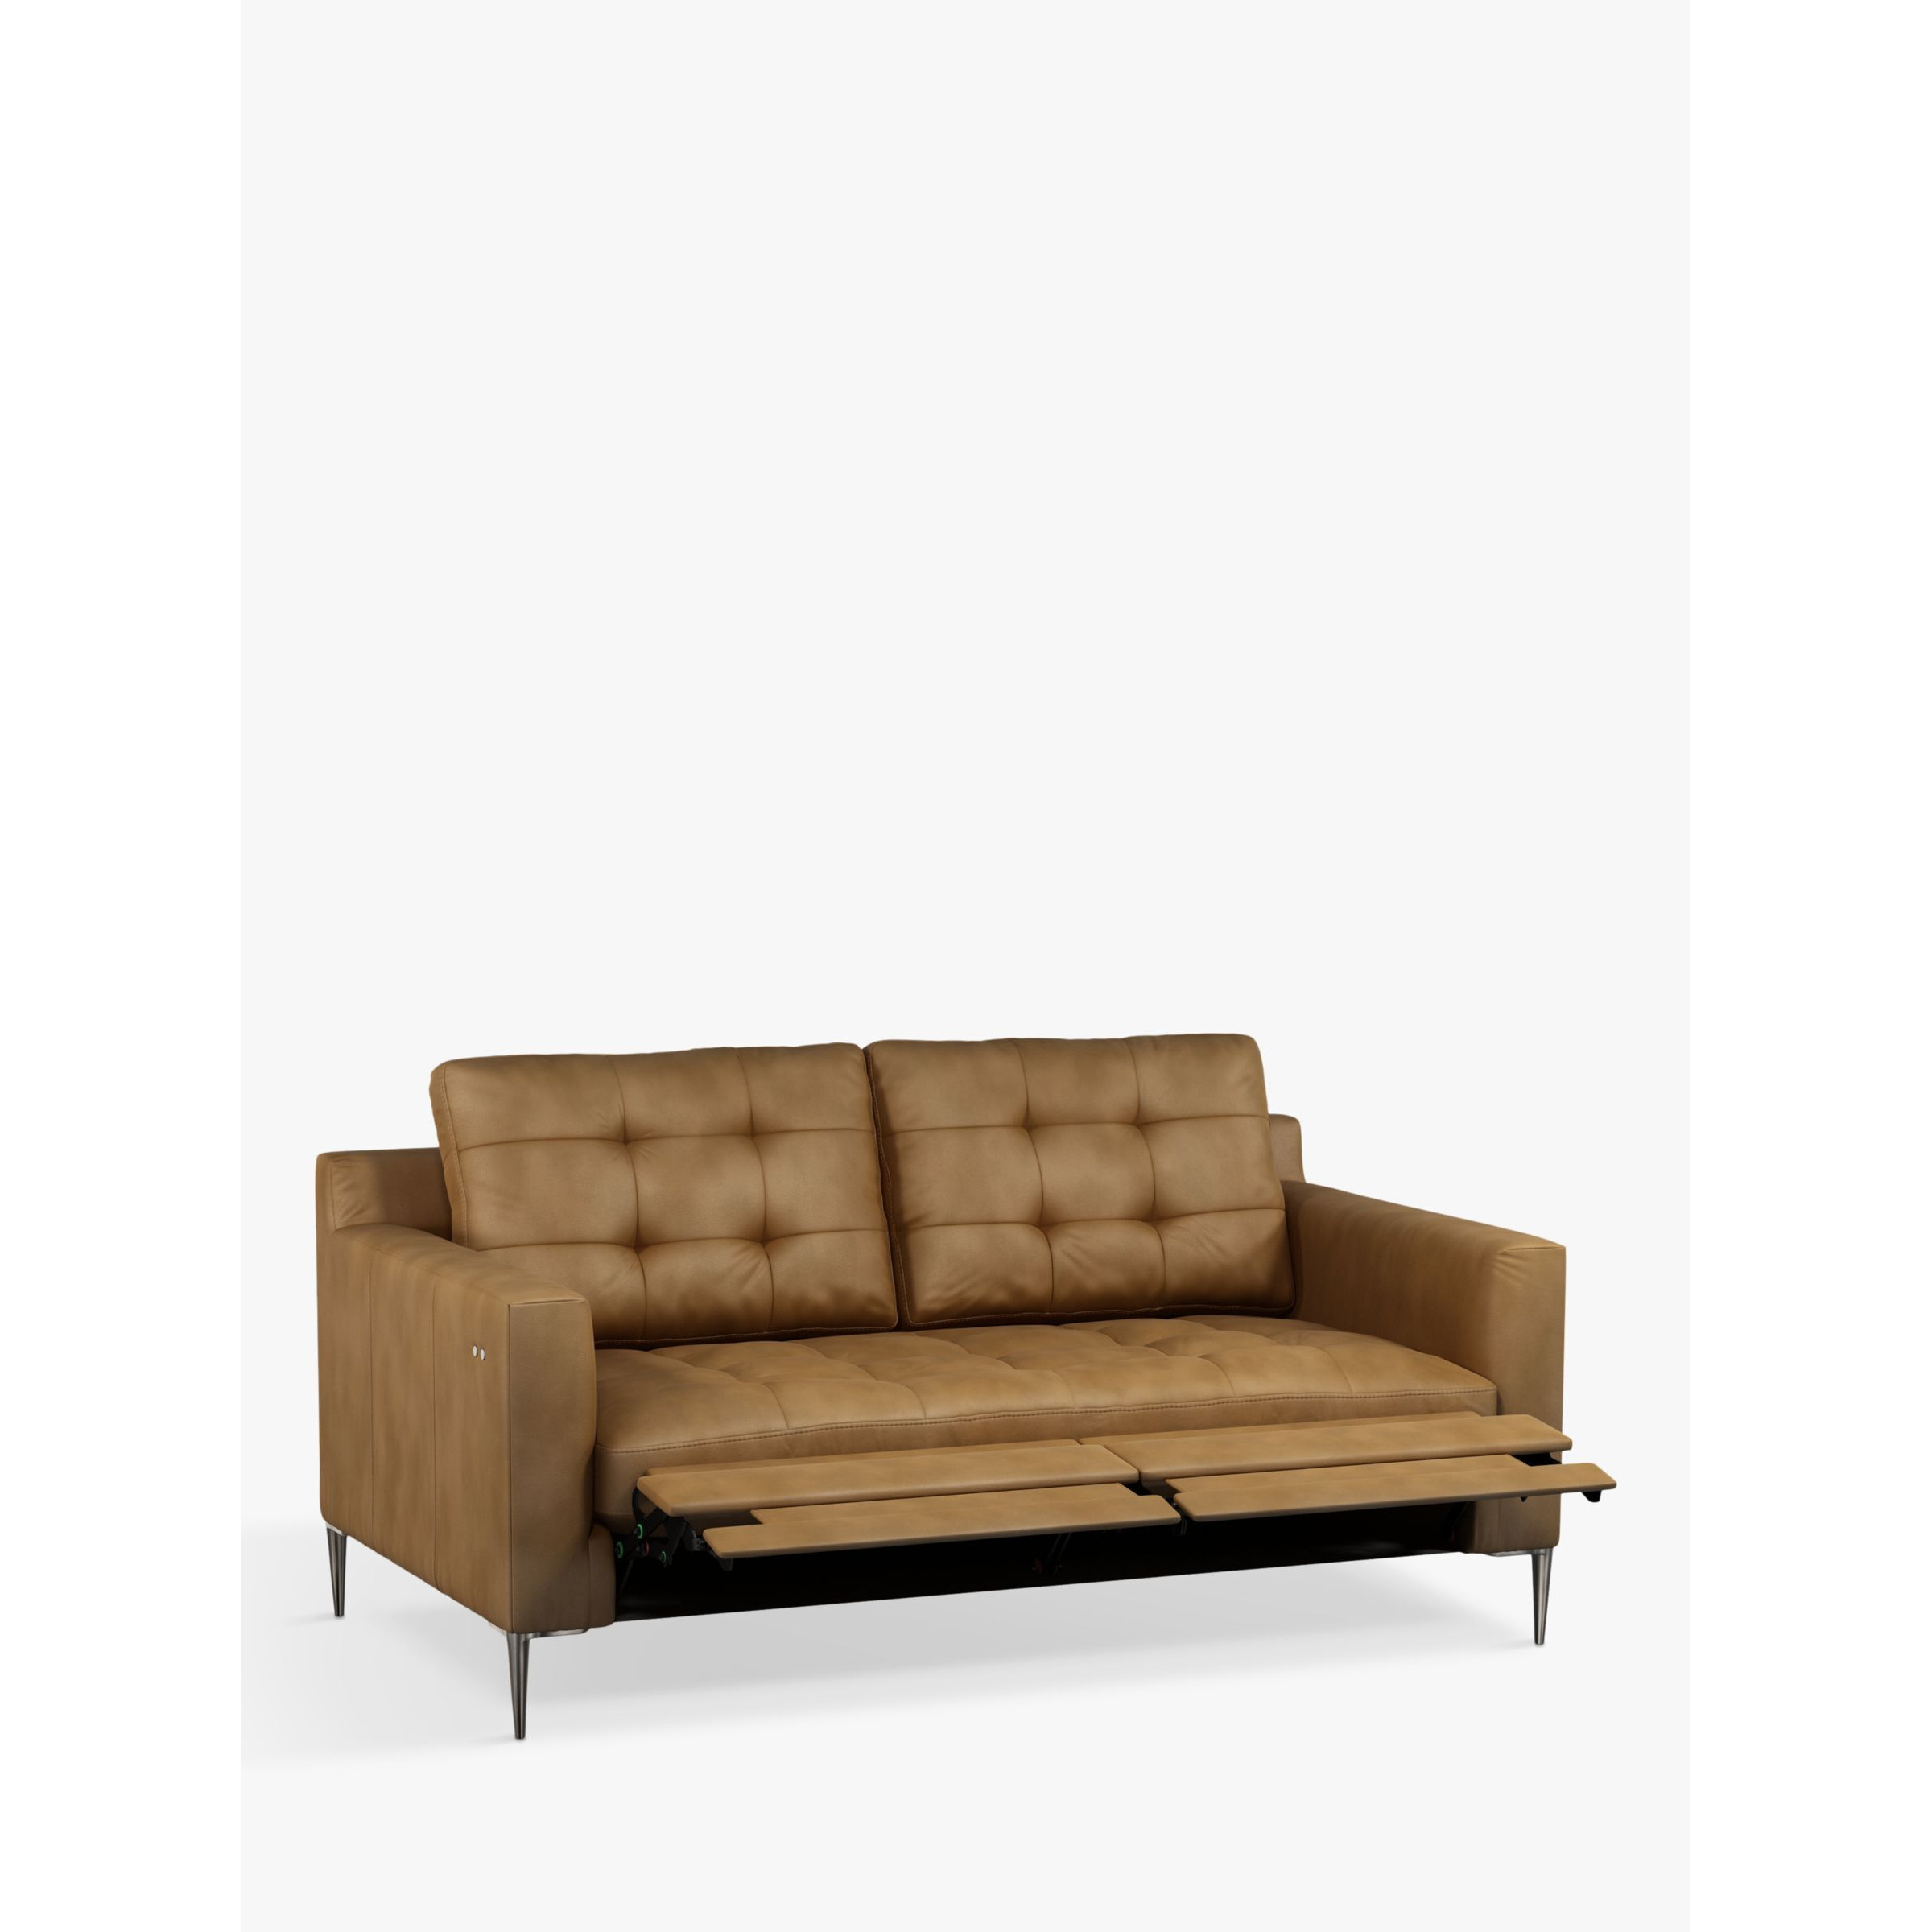 John Lewis Draper Motion Medium 2 Seater Leather Sofa with Footrest Mechanism, Metal Leg - image 1